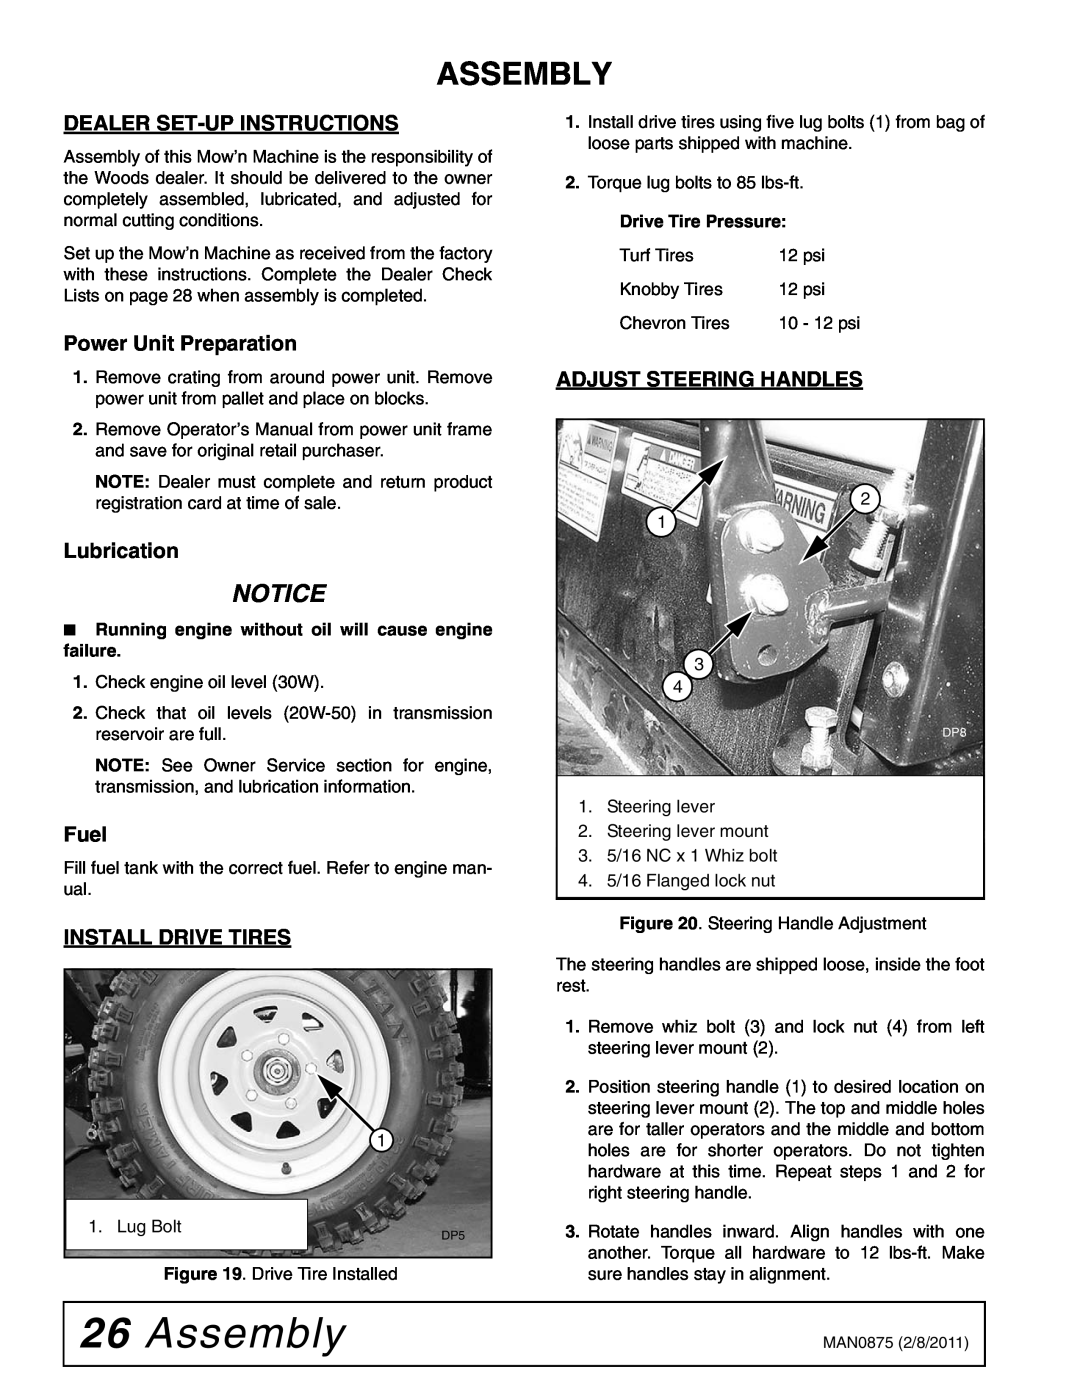 Woods Equipment FZ28K Assembly, Dealer Set-Upinstructions, Power Unit Preparation, Lubrication, Fuel, Install Drive Tires 